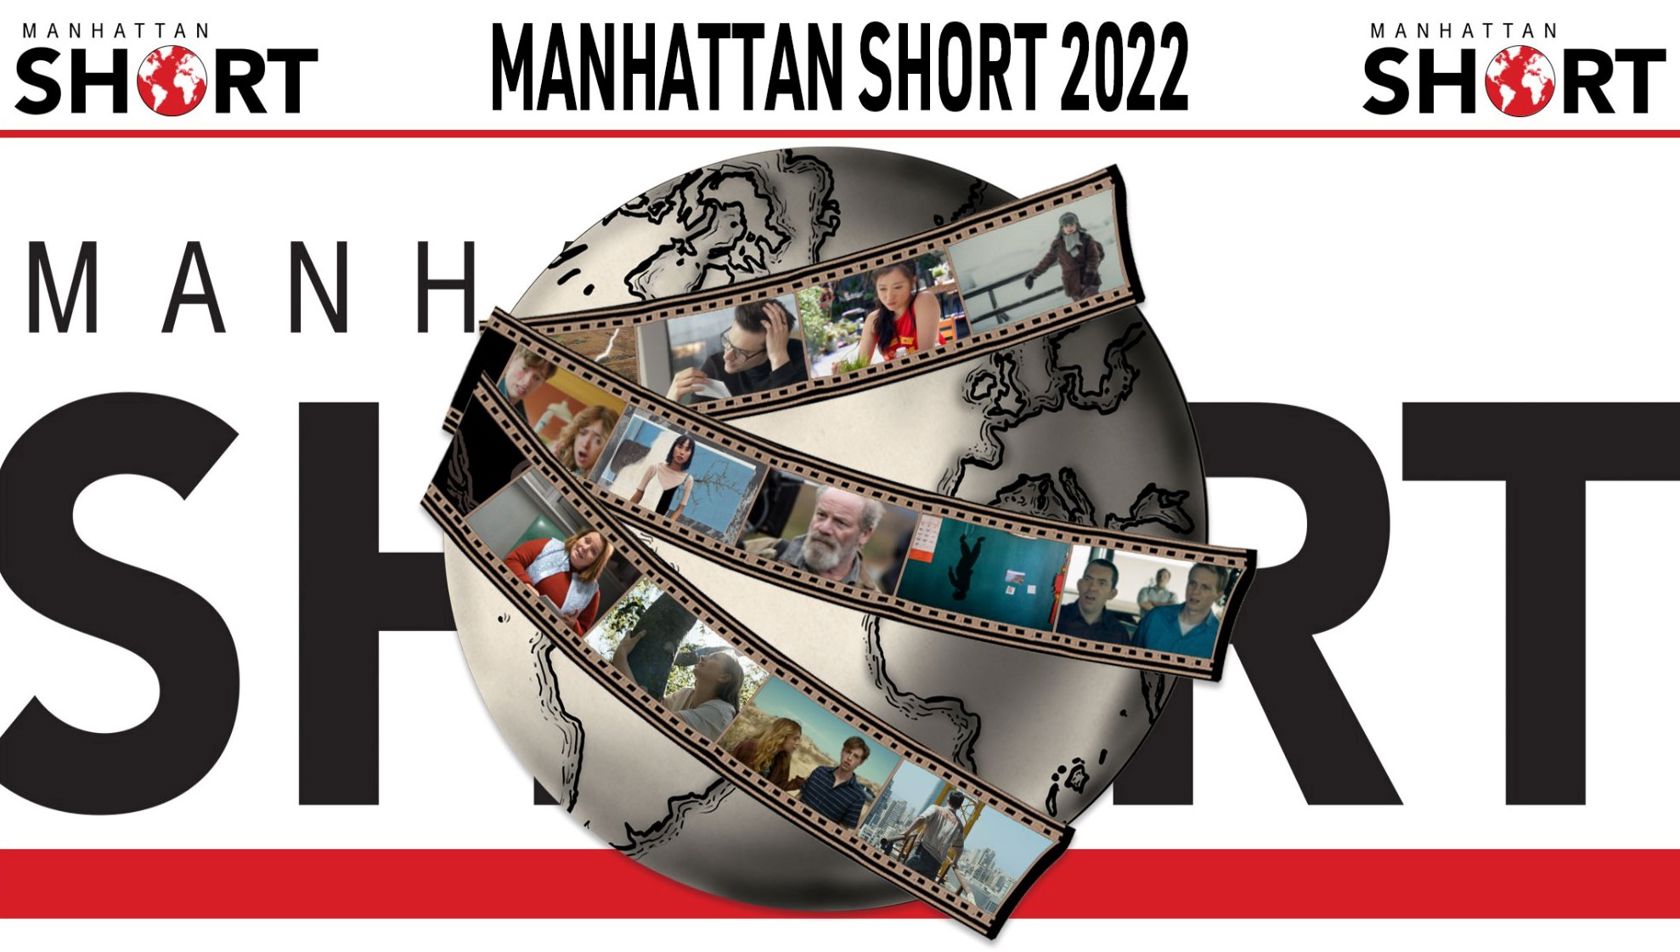 Promotional still for 2022 Manhattan Shorts Film Festival